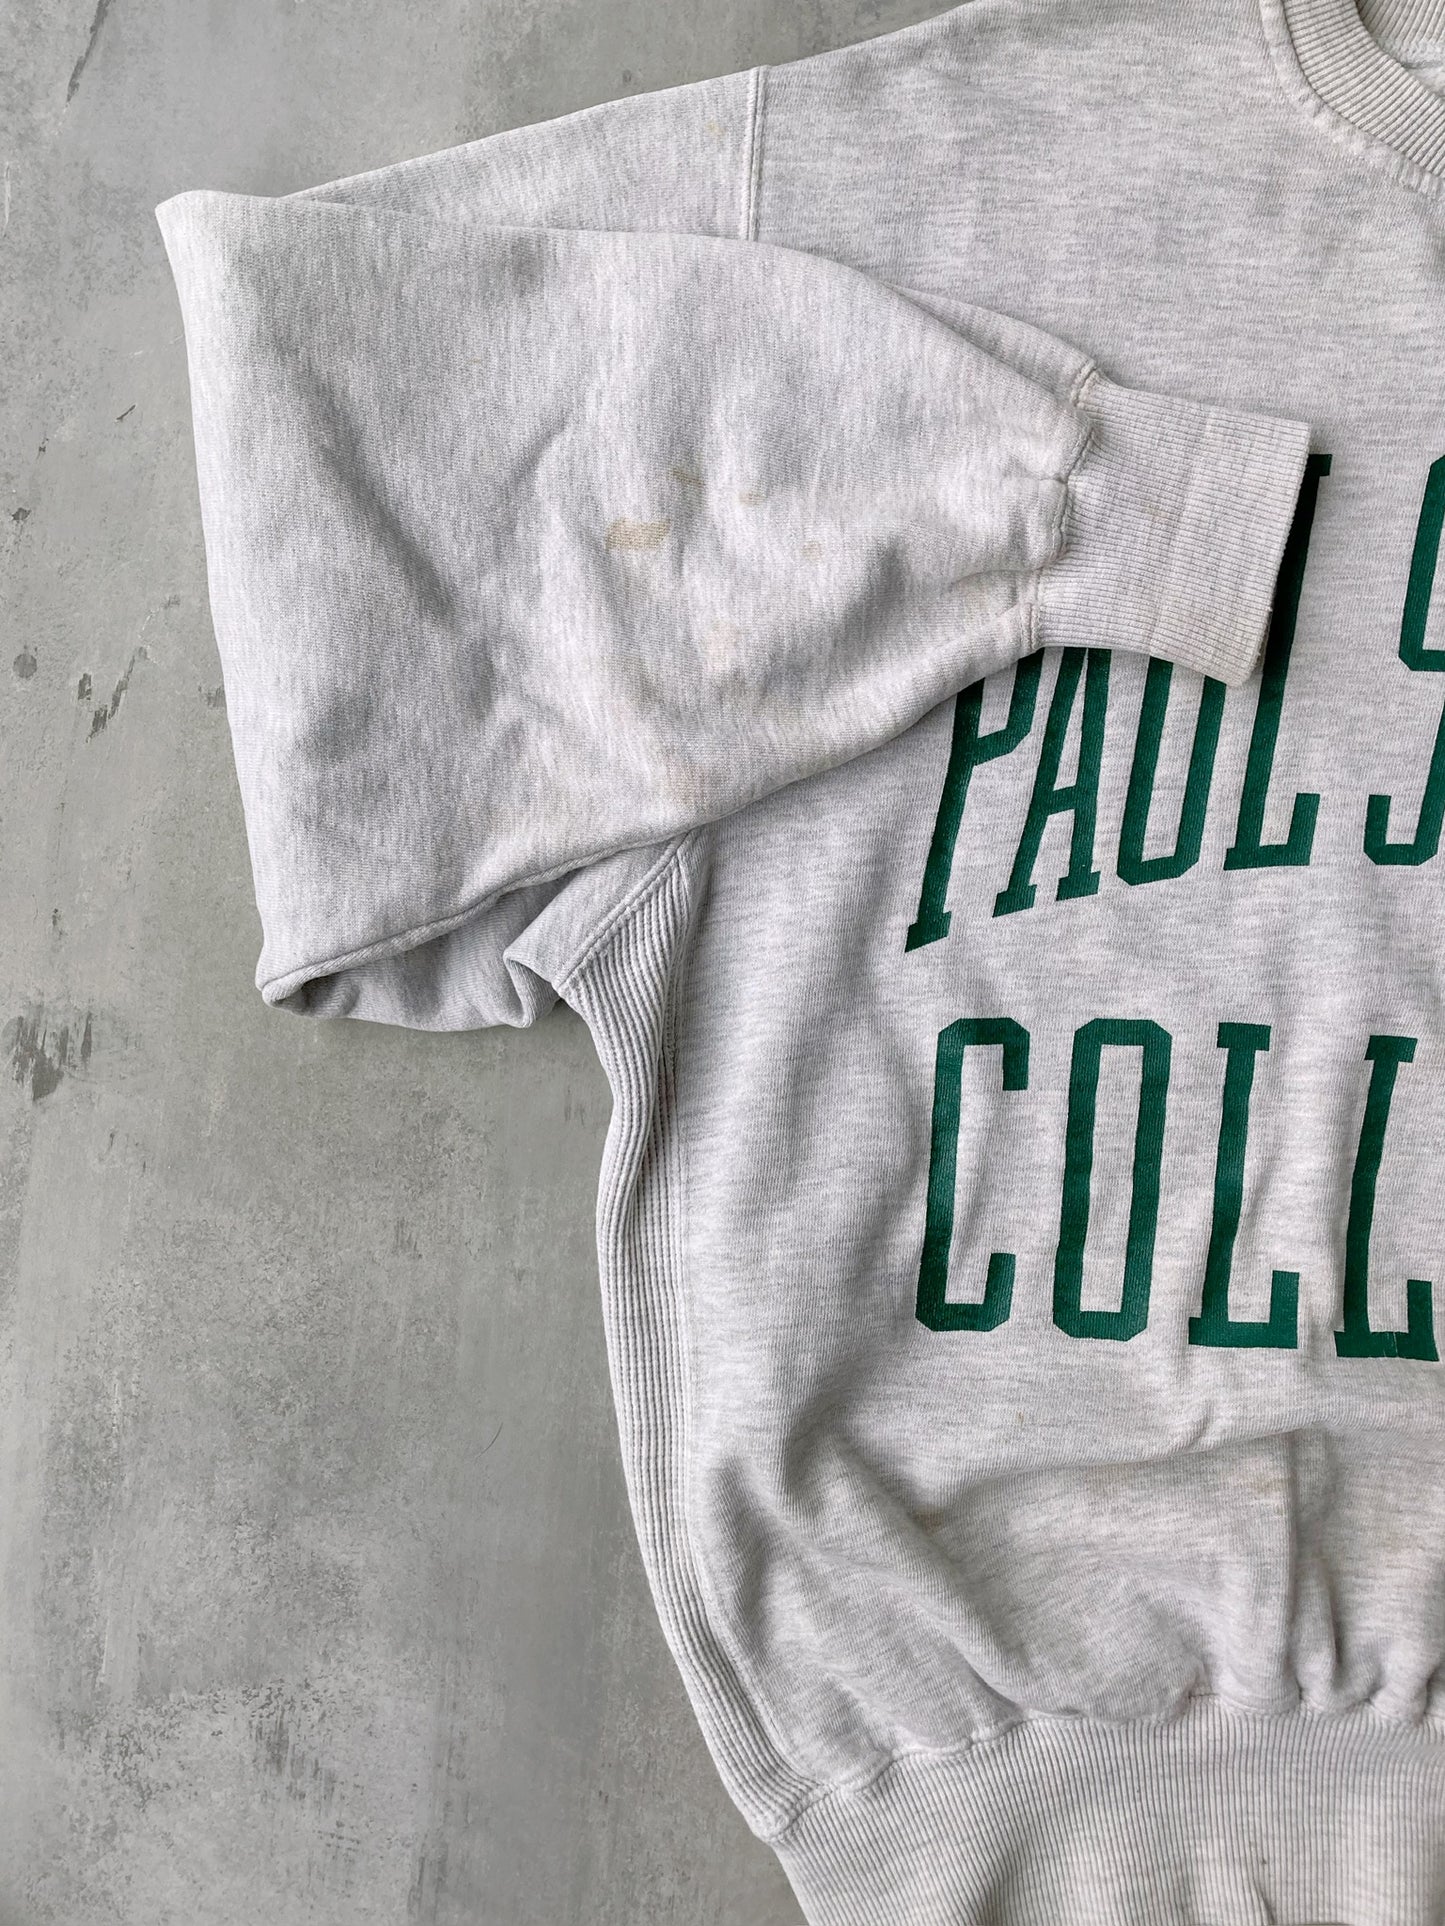 Paul Smith's College Sweatshirt 90's - Large